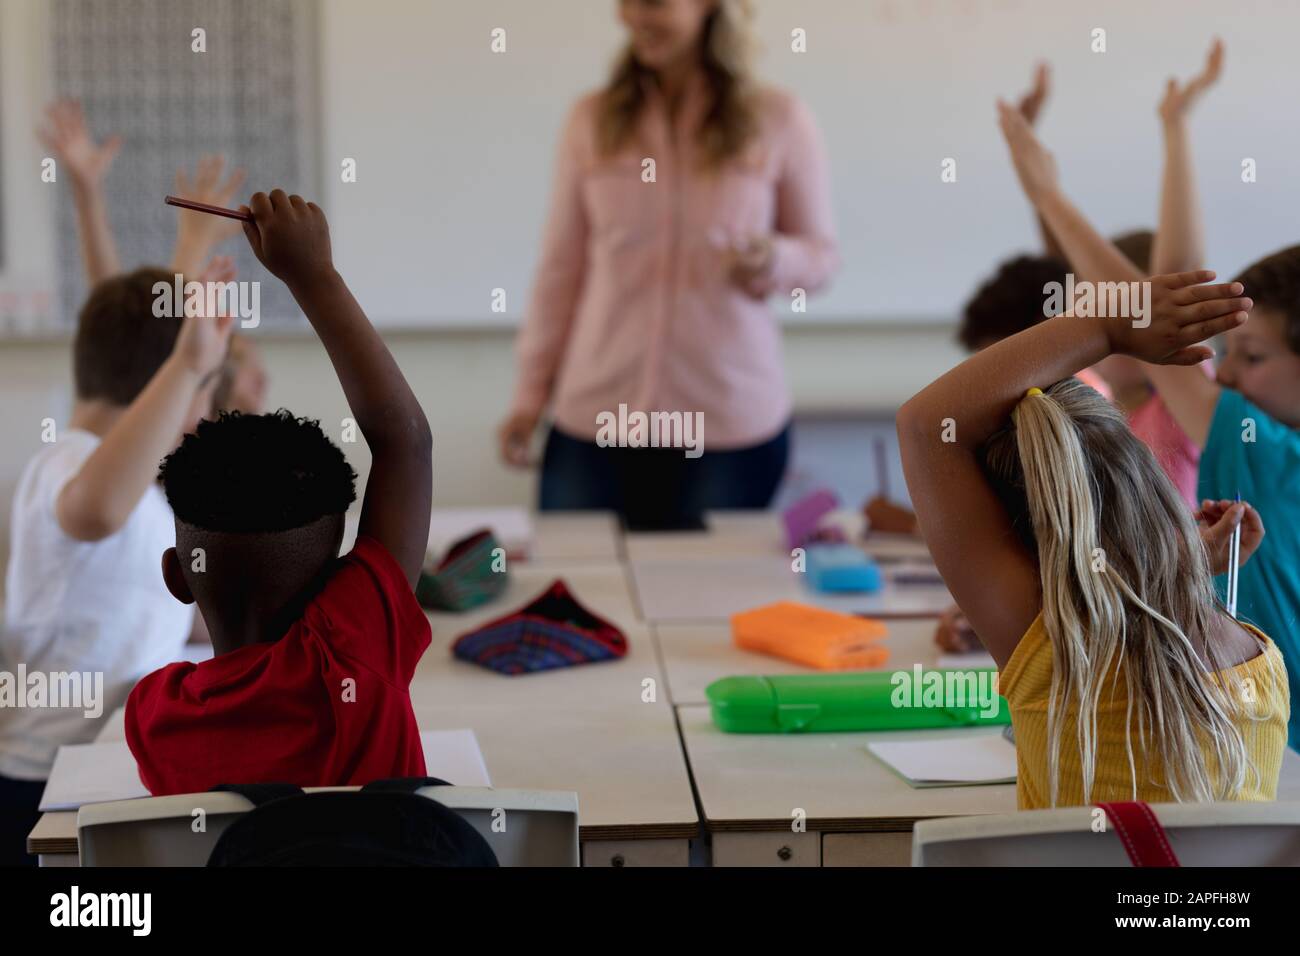 Schoolboy raising their hands in an elementary school classroom Stock Photo